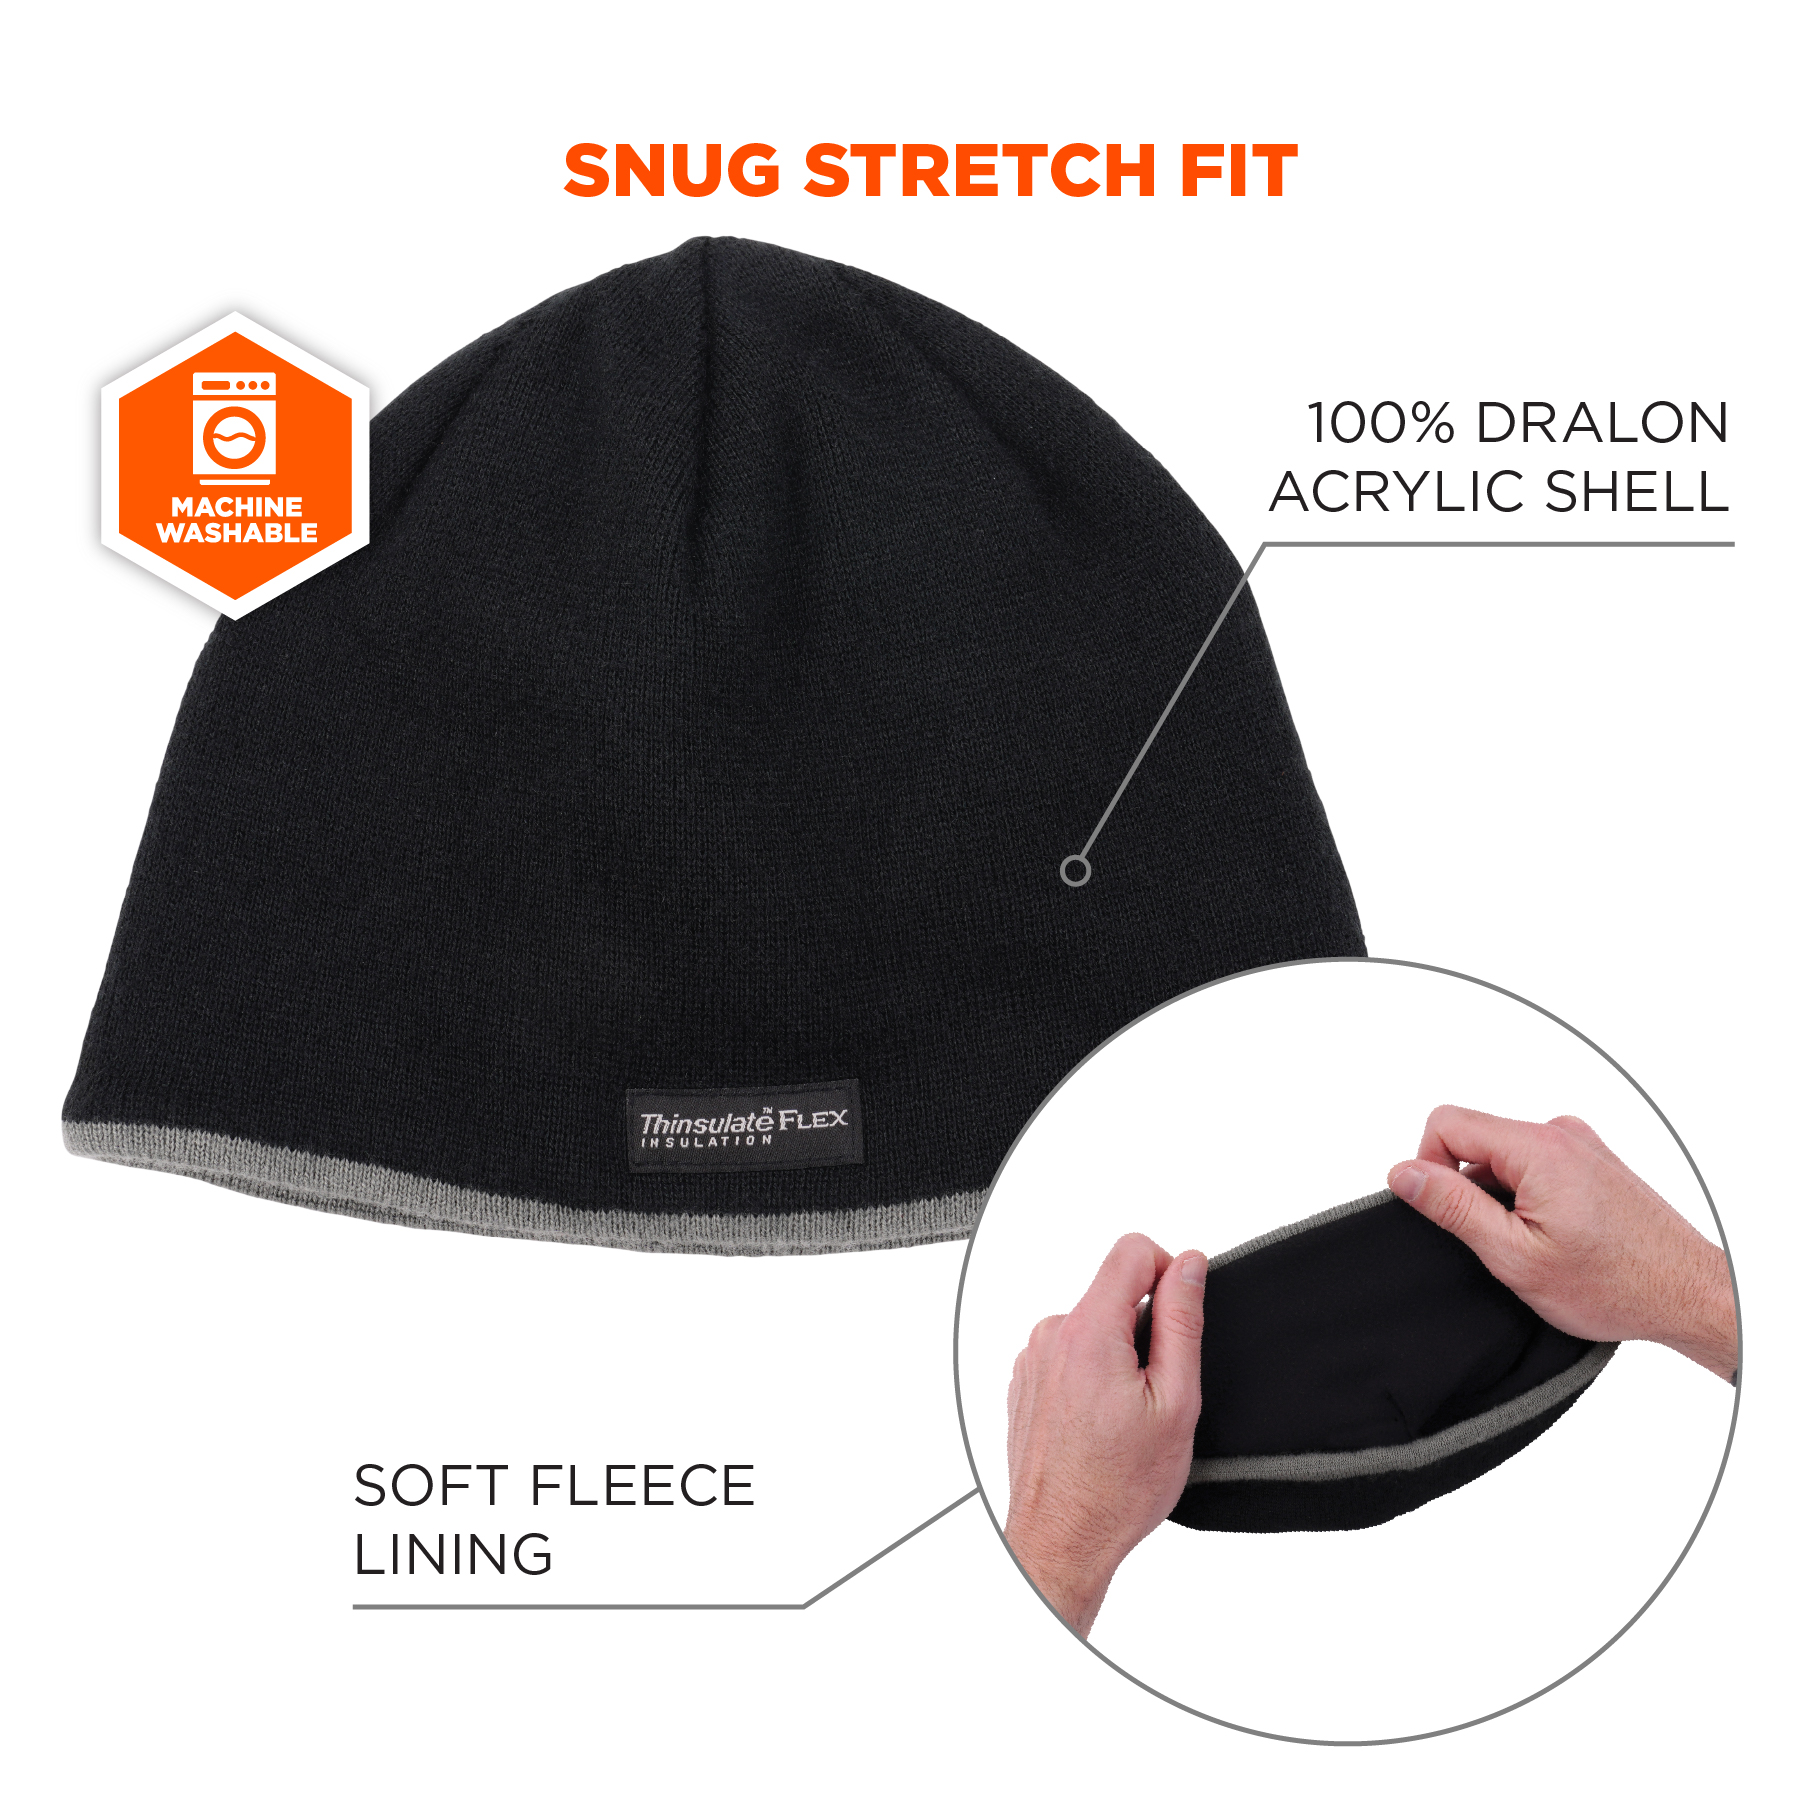 https://www.ergodyne.com/sites/default/files/product-images/16818-6818-knit-winter-hat-black-snug-stretch-fit.jpg